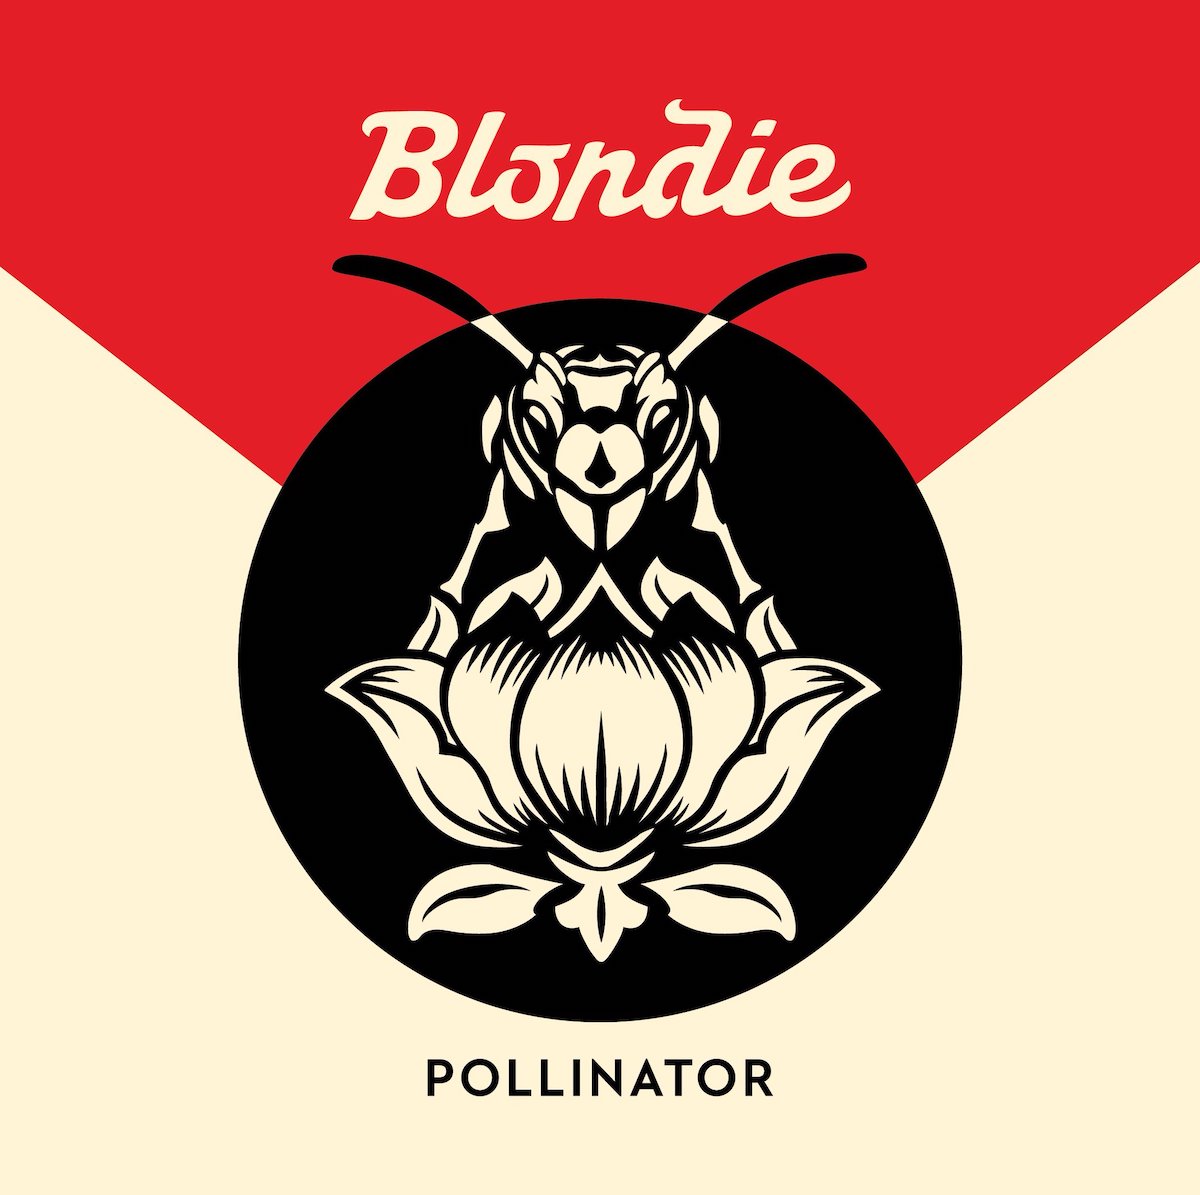 Blondie Pollinator album cover pop art by Shepard Fairey